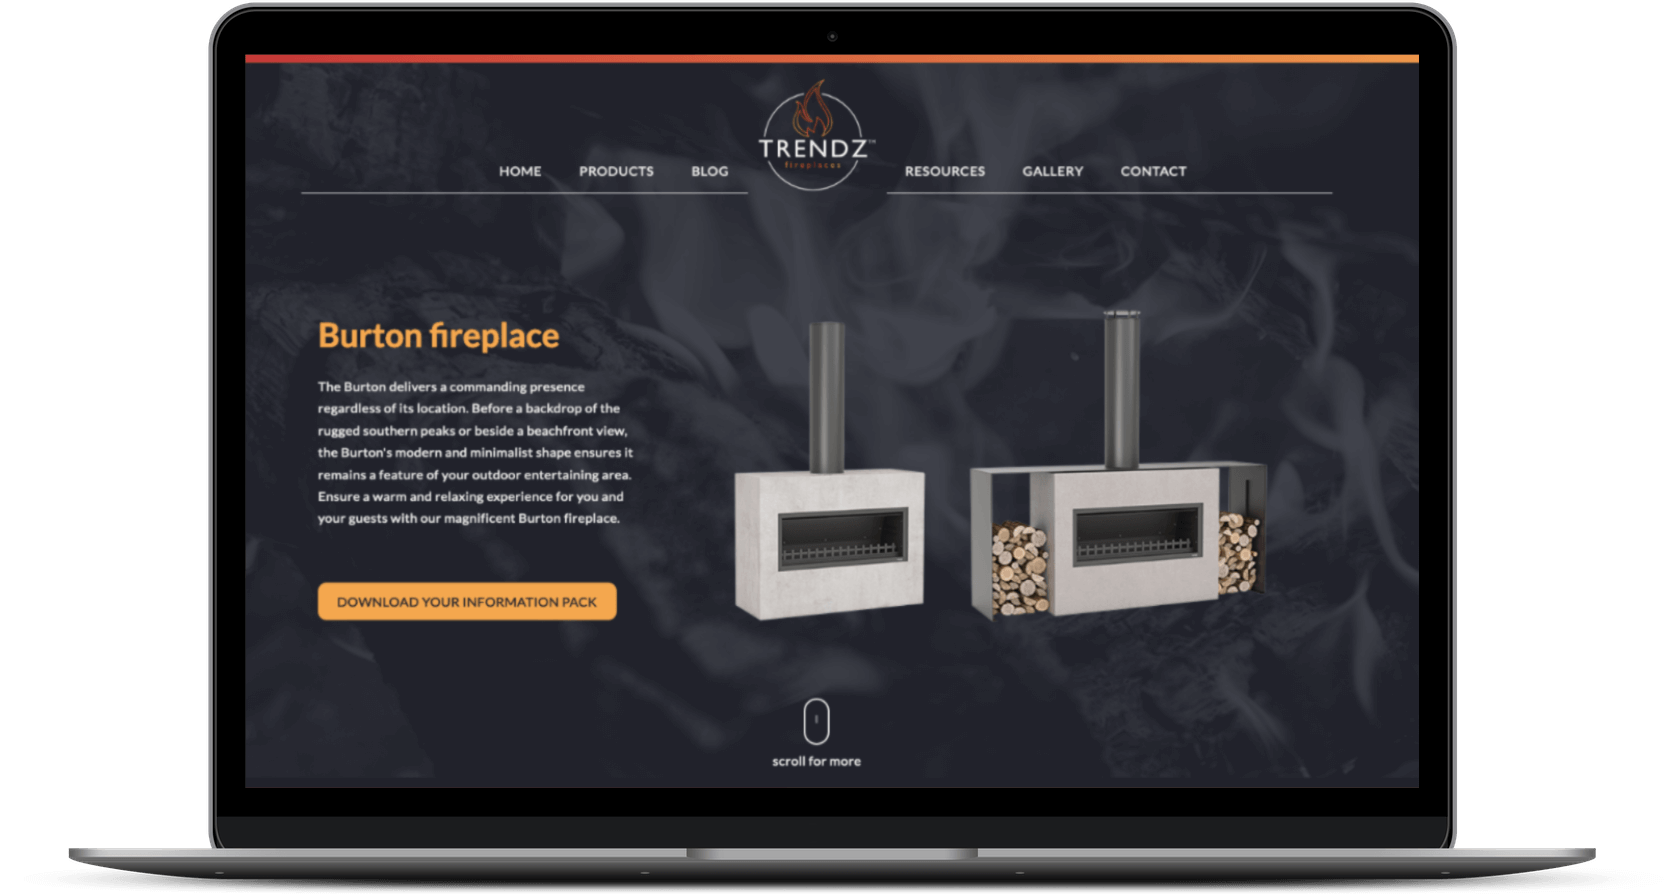 Trendz new website design